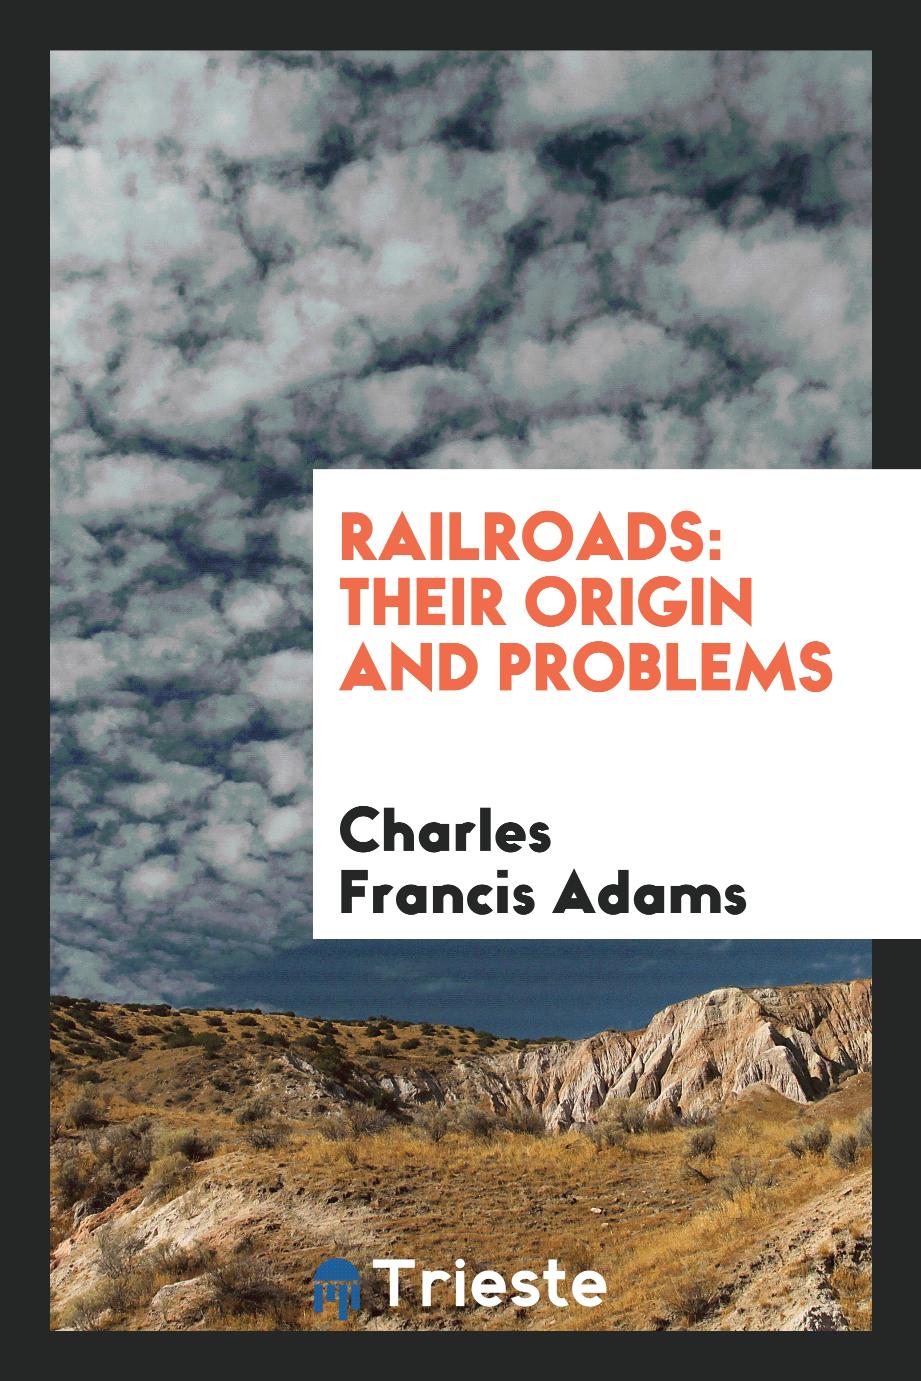 Railroads: their origin and problems